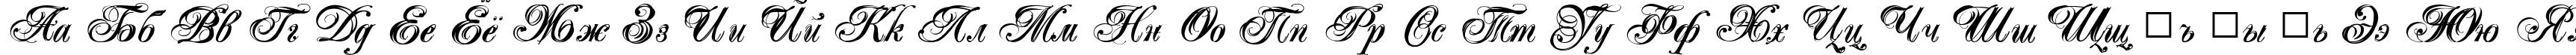 Пример написания русского алфавита шрифтом Majestic X